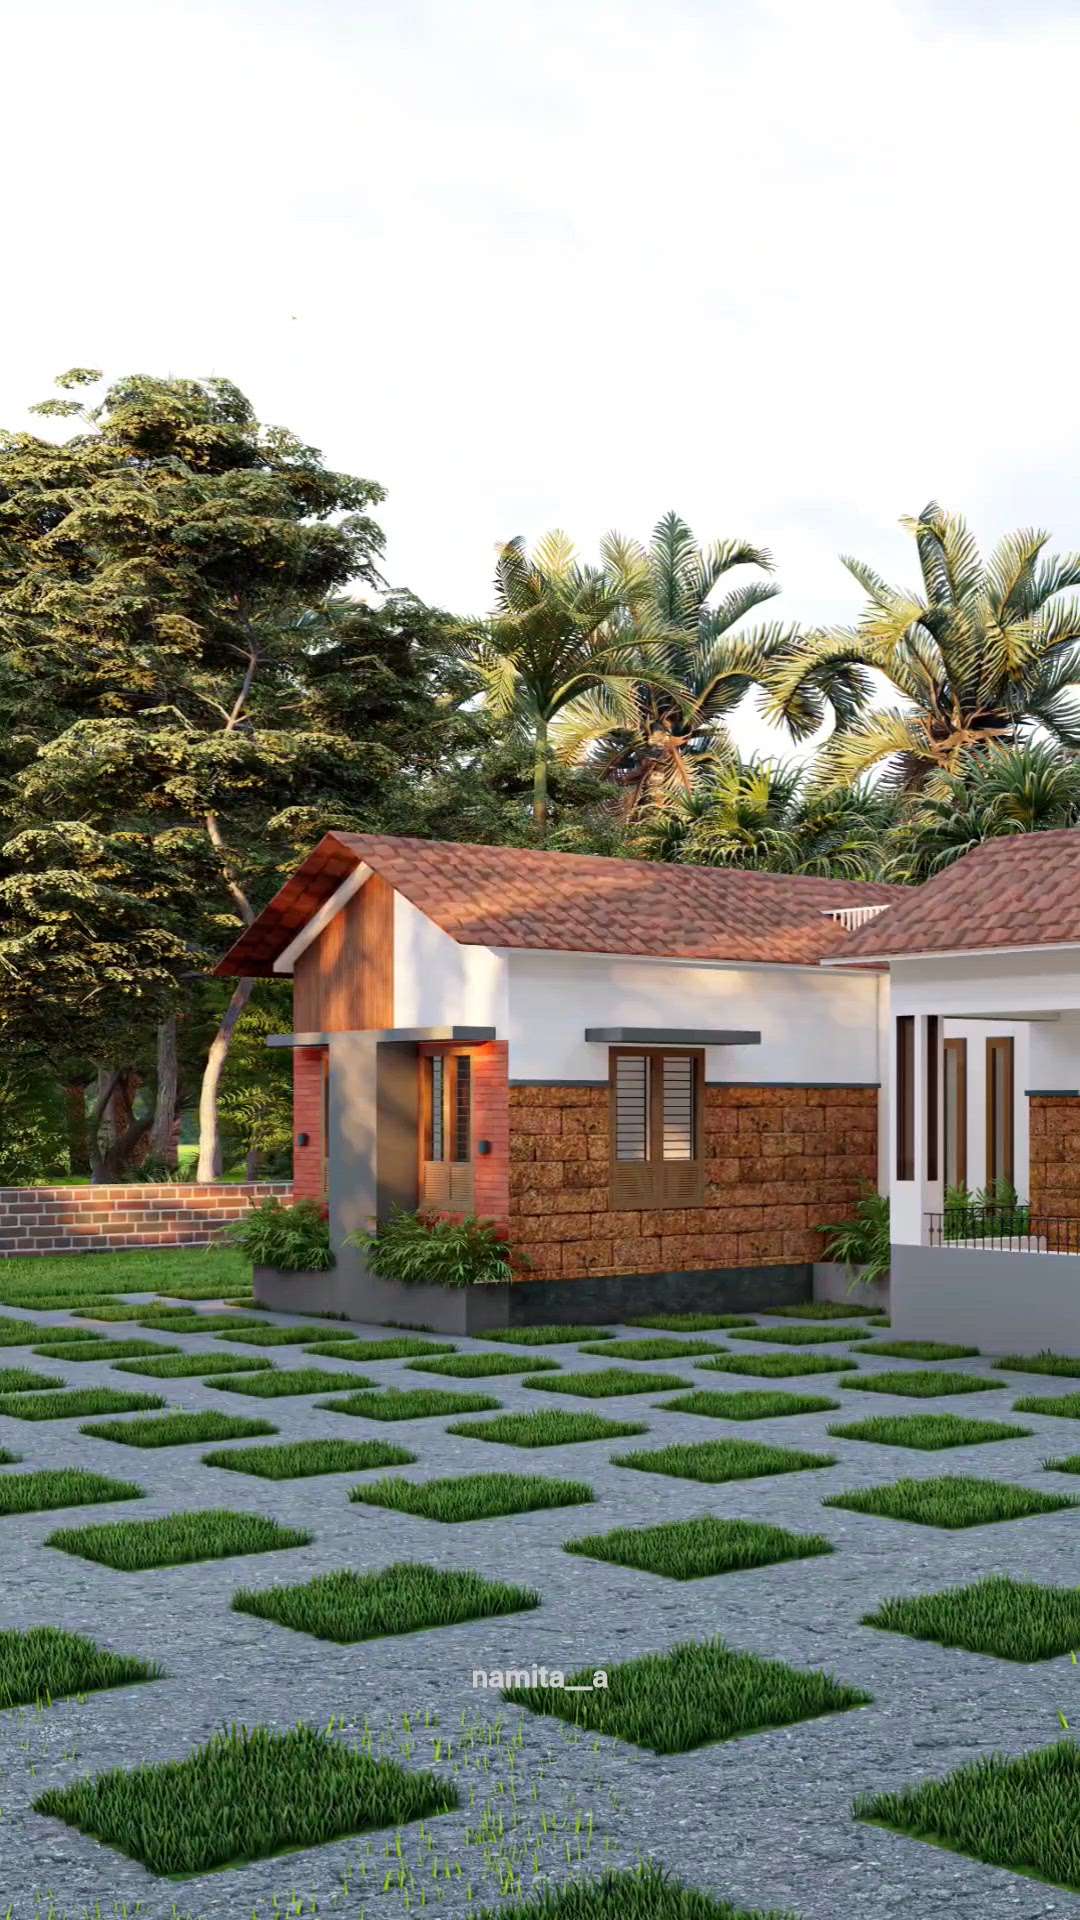 2BHK Traditional Home🍃🏡

കുറഞ്ഞ നിരക്കിൽ വീടിന്റെ 🏠 3D Design ചെയ്തു കൊടുക്കുന്നു.
                                  
*3D Elevation Design ചെയ്യാൻ താല്പര്യം ഉള്ളവർ whatsapp ൽ message ചെയ്യുക 

Up to 1000sq.ft plan, charge- 1500rs.
Up to 1500sq ft plan, charge- 2500rs
Upto 3000sq ft plan ,charge - 3500rs

 #HouseDesigns 
#render3d3d #HouseDesigns #hous
#KeralaStyleHouse #lowbudgethousekerala 
#ElevationHome #loveit 
#Kollam #SemiTraditionalStyle 
#stylish #tradition 
#TraditionalHouse